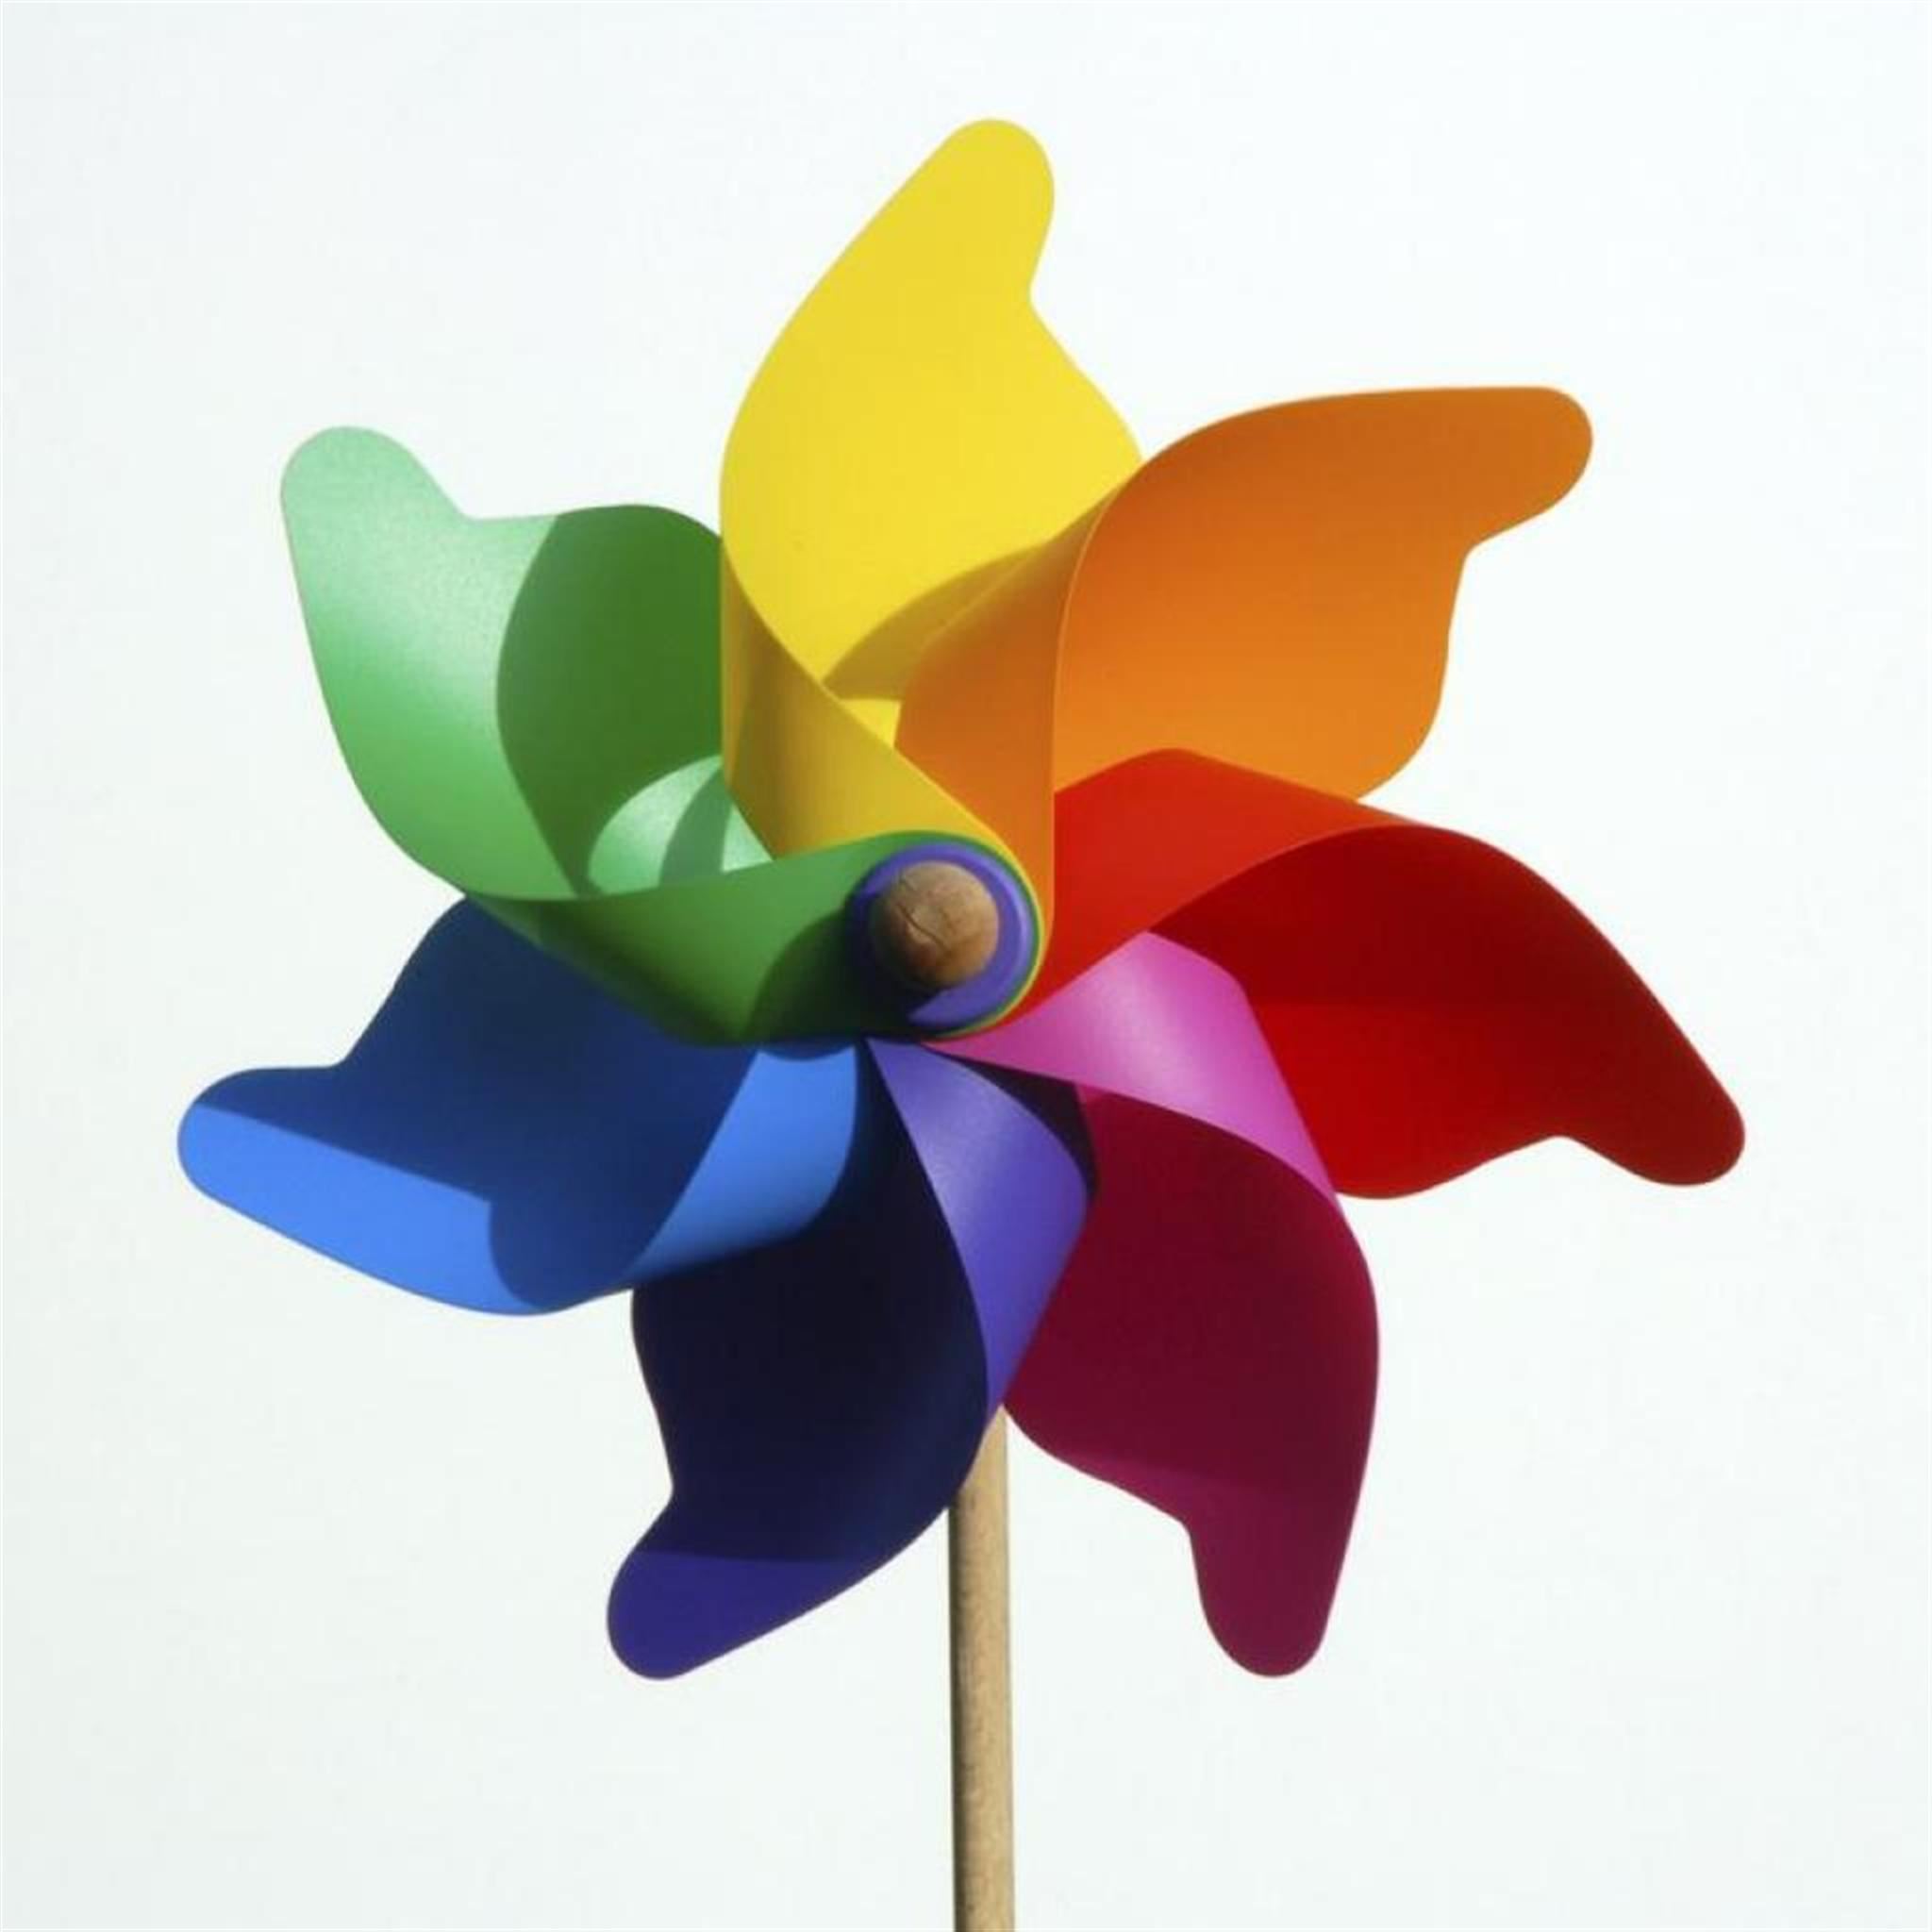 Design Colorful Windwill Art iPad Air wallpaper 